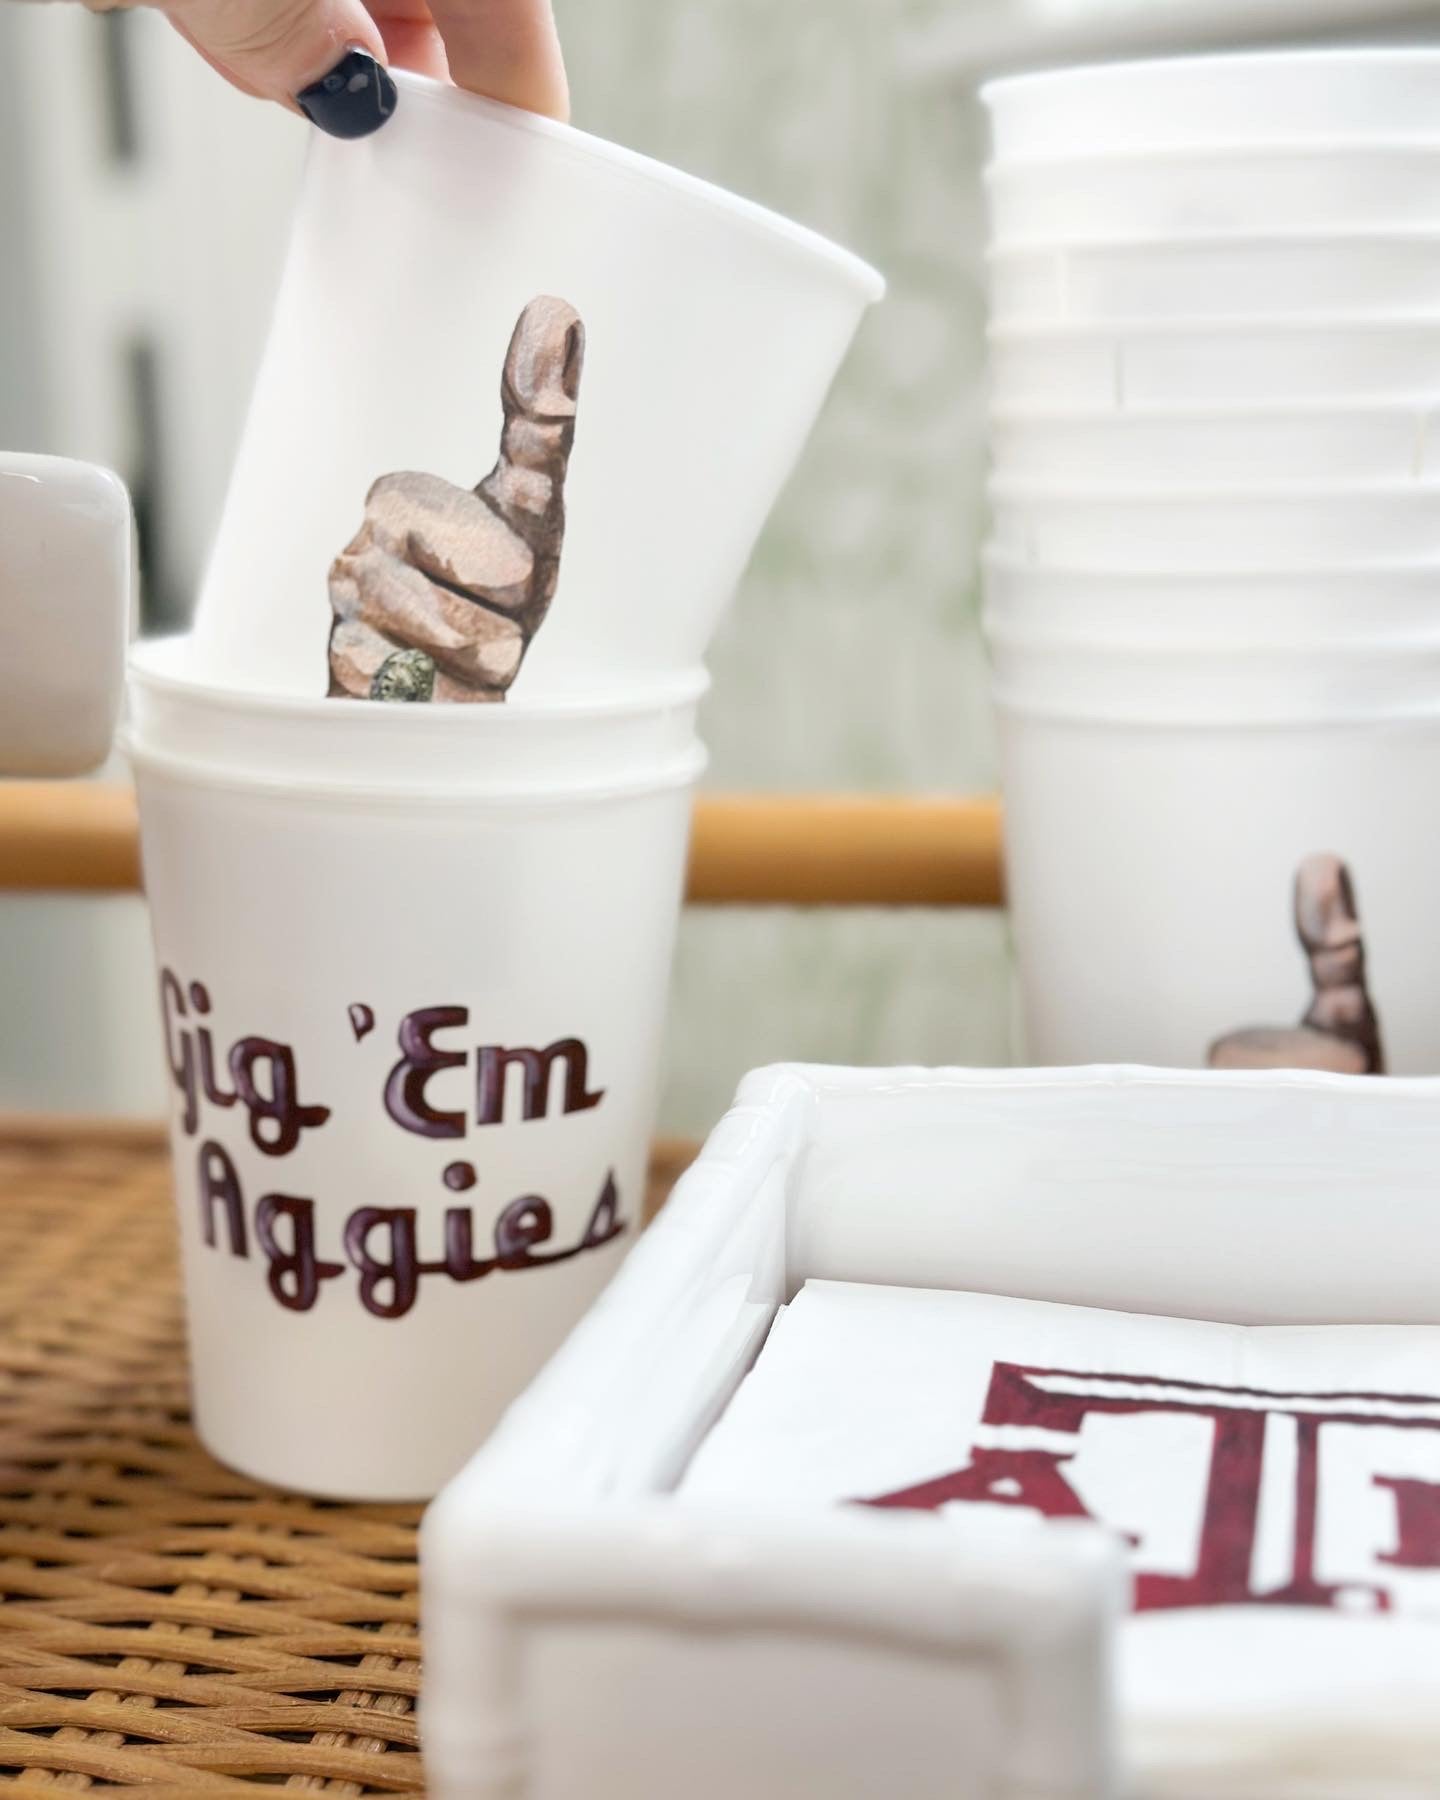 Texas A&M Gig Em reusable plastic cup set